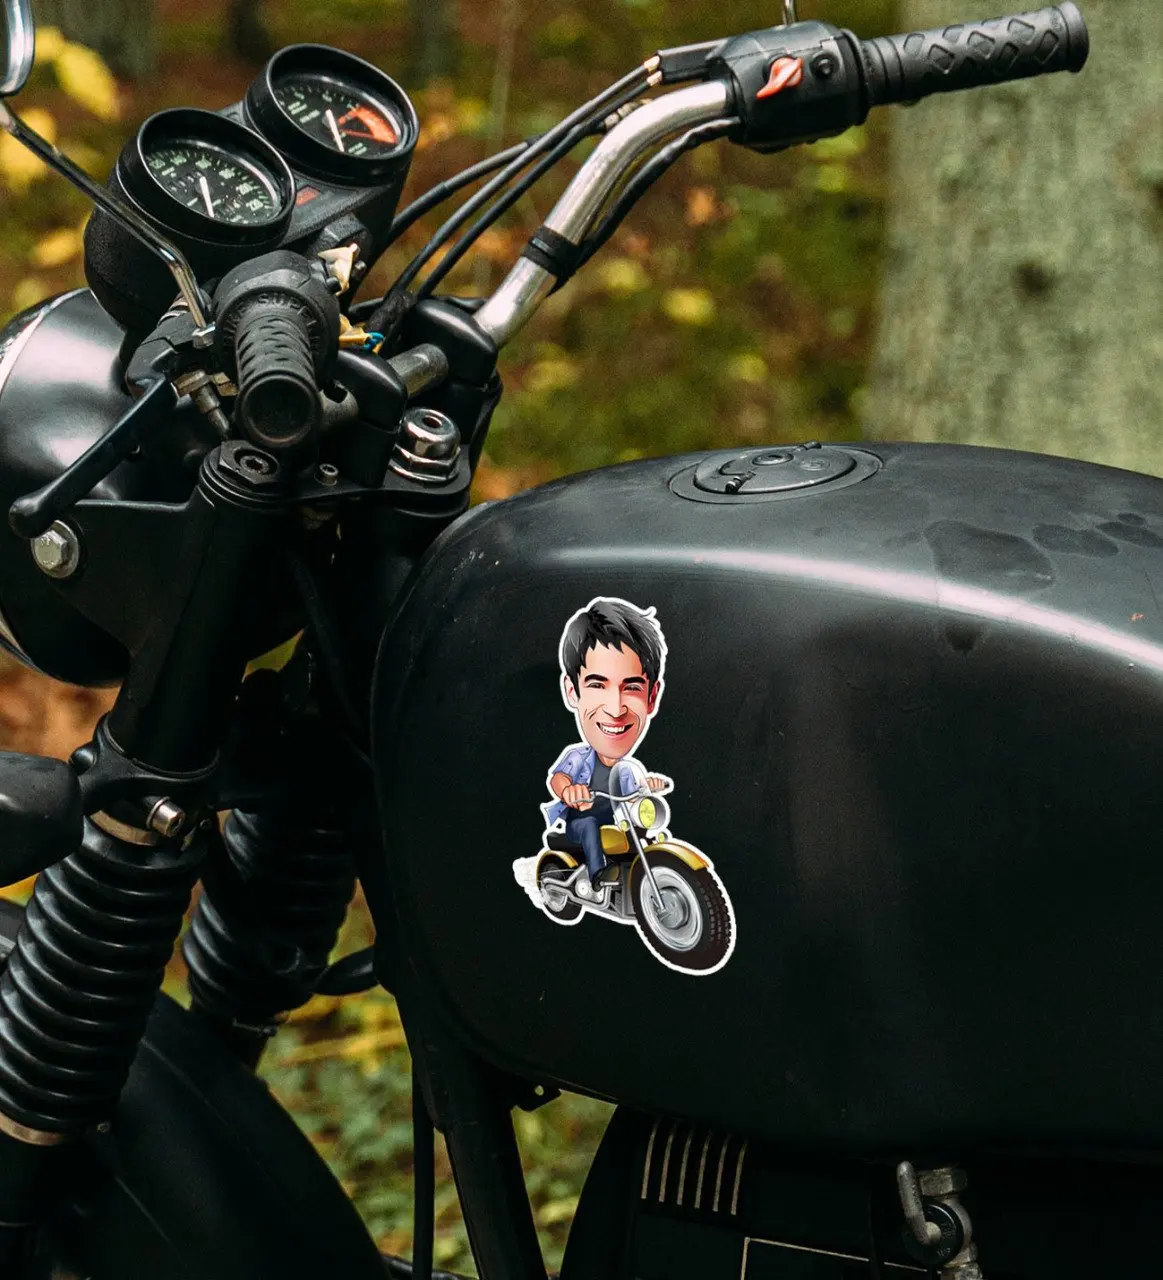 Персонализированная Мужская наклейка на мотоцикл карикатура-1 от AliExpress WW